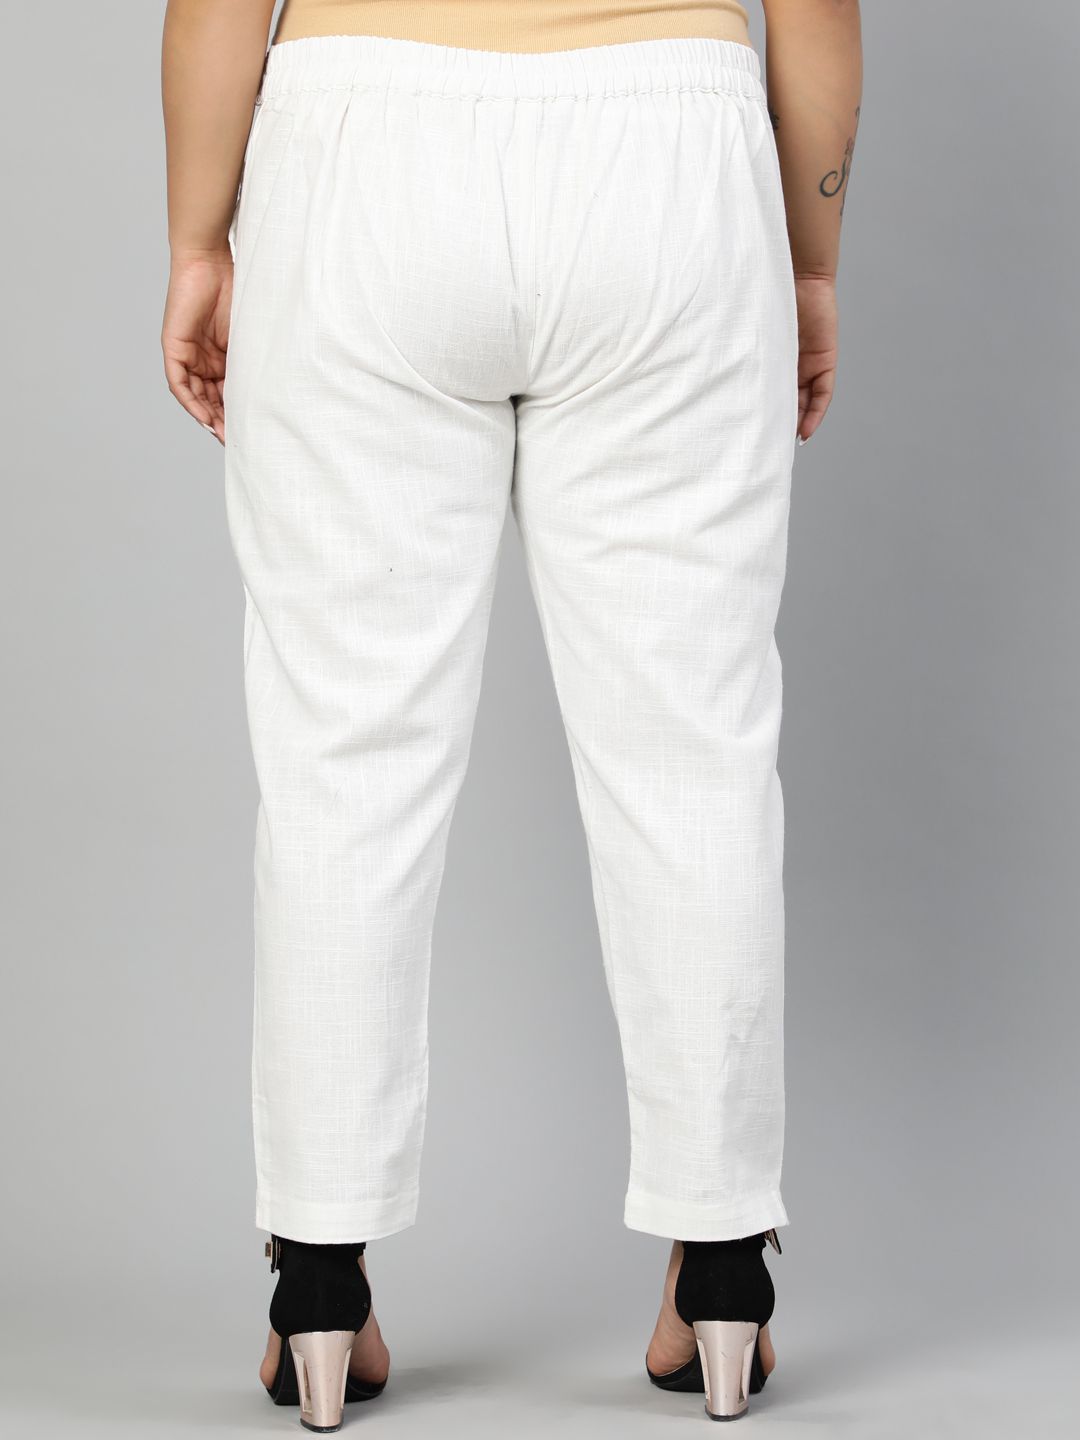 Buy women's casual pants with elastic waist